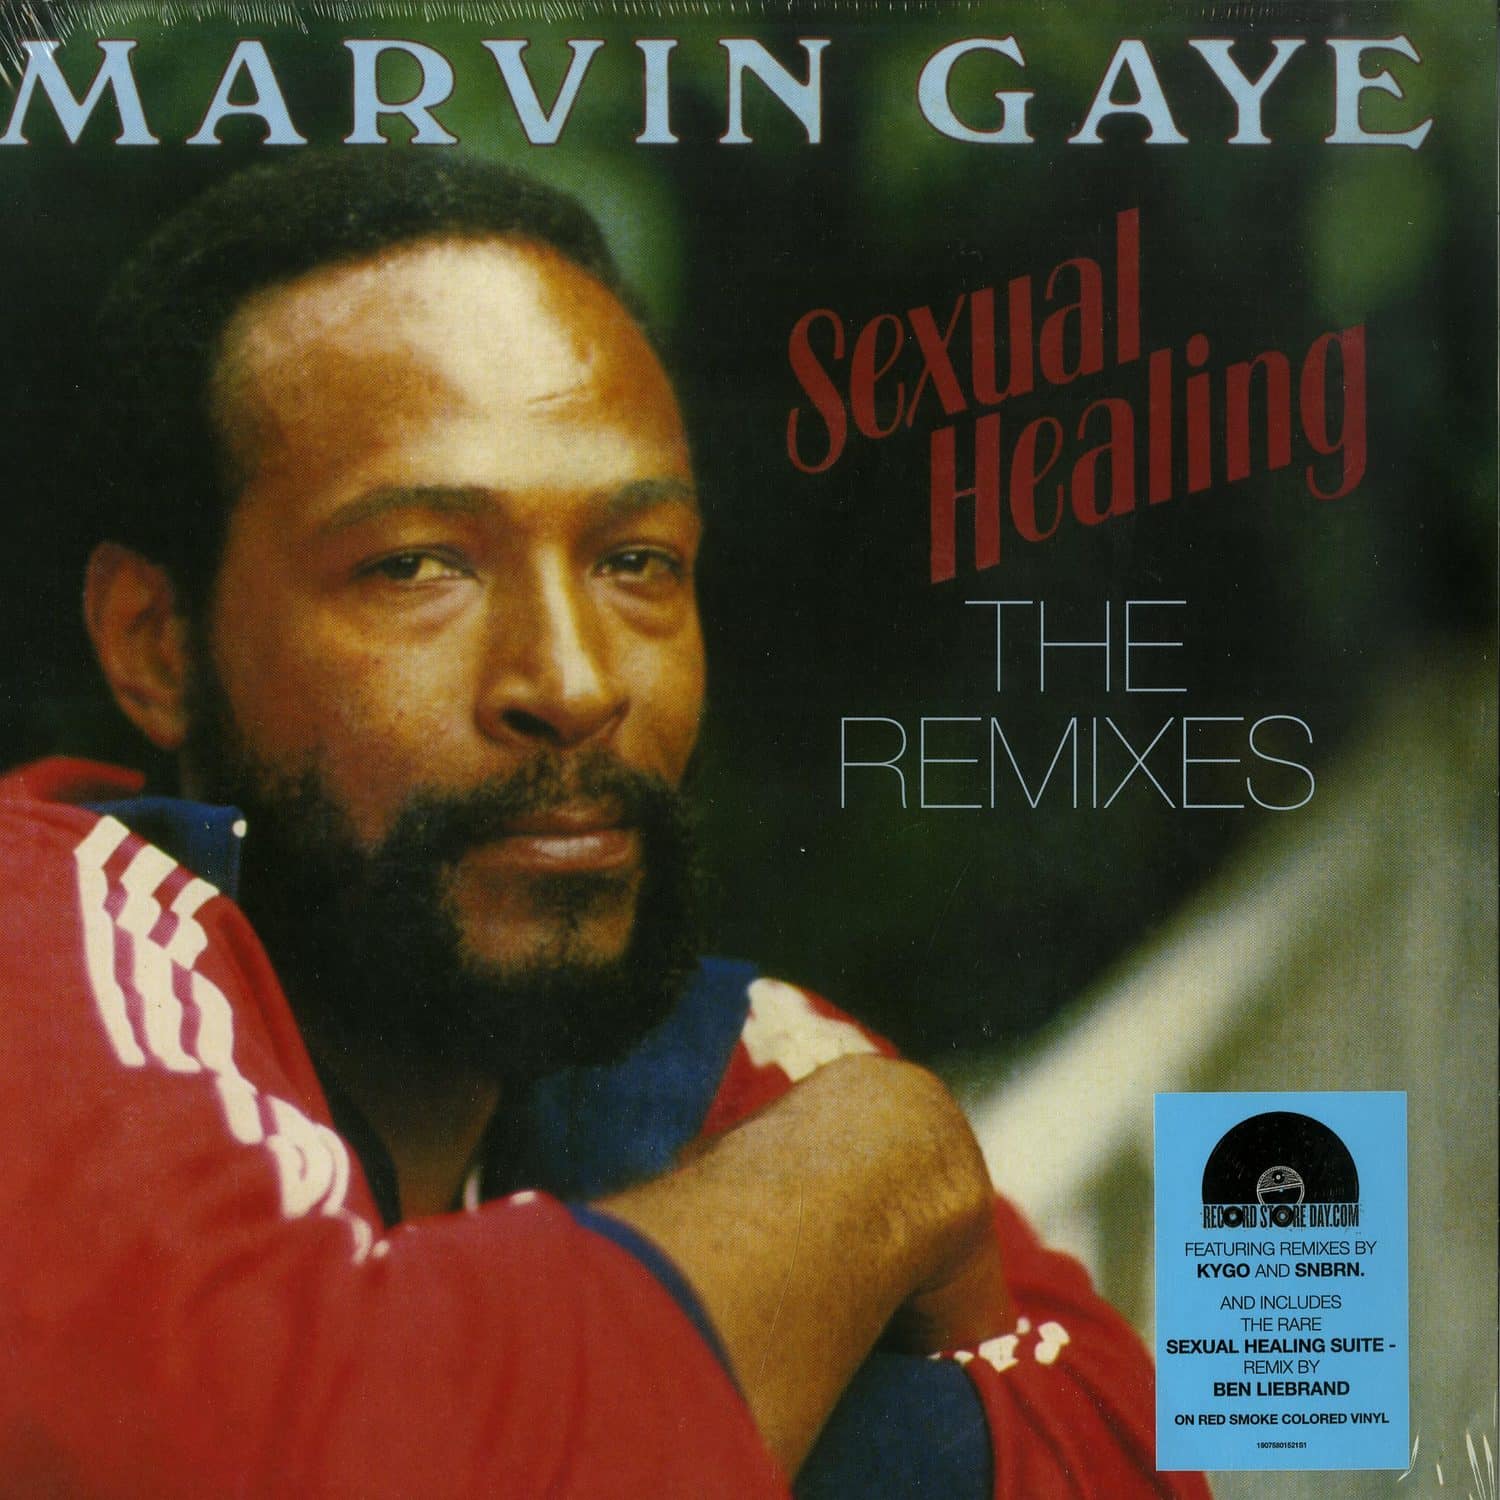 Marvin Gaye - sexual healing - the remixes (ltd red rsd lp)